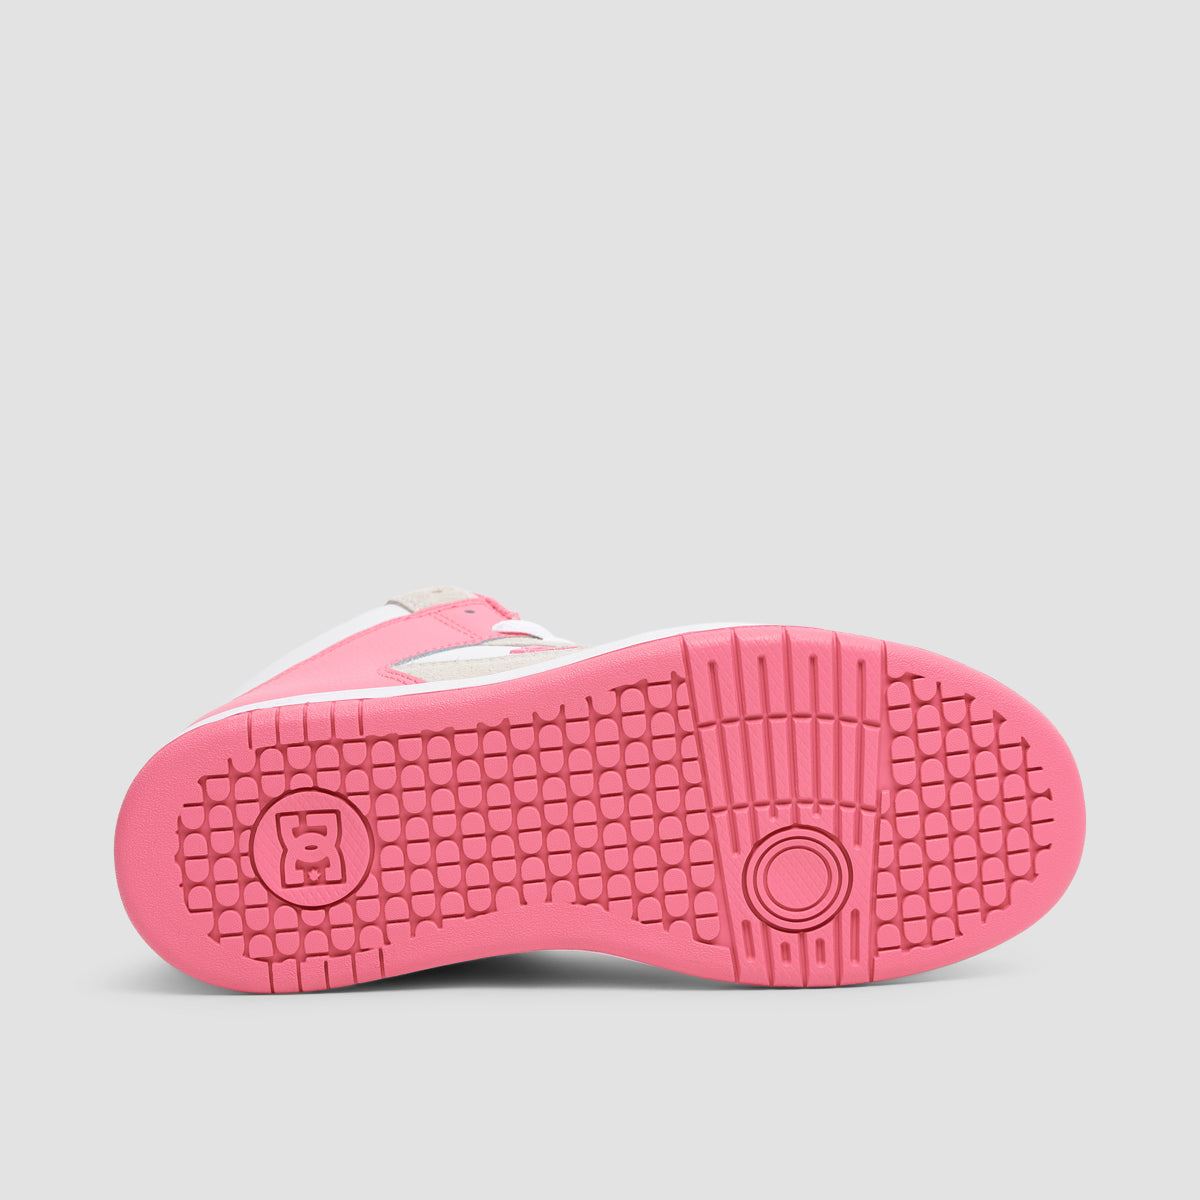 DC Manteca 4 Hi Shoes - Pink/White - Womens